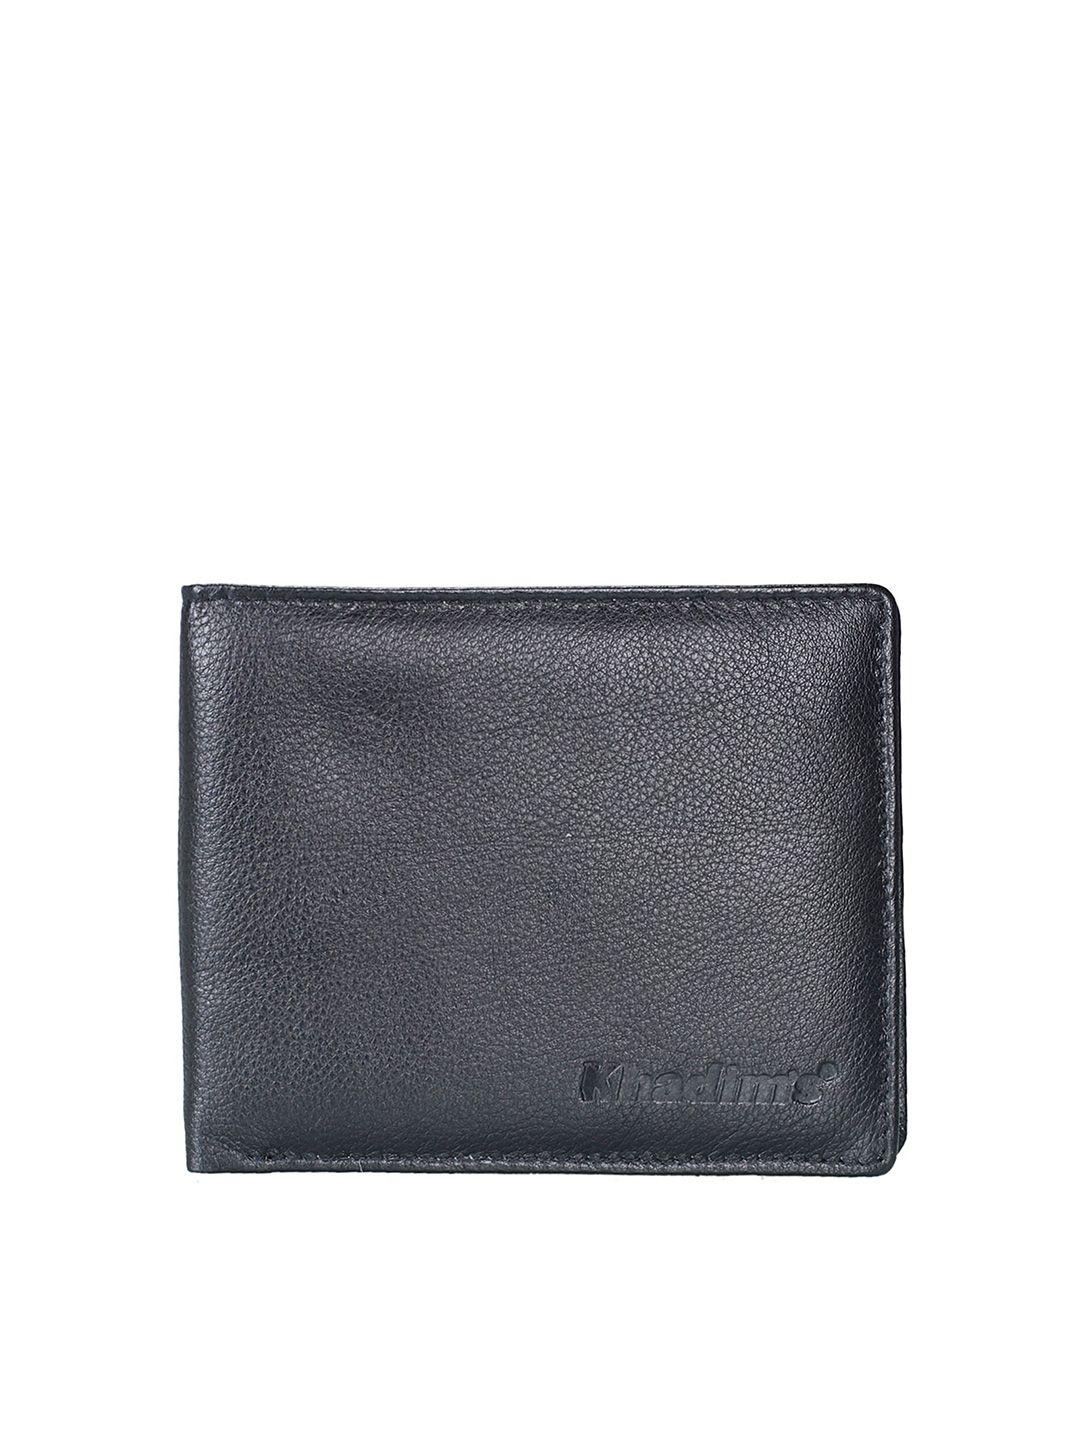 khadims men black leather two fold wallet